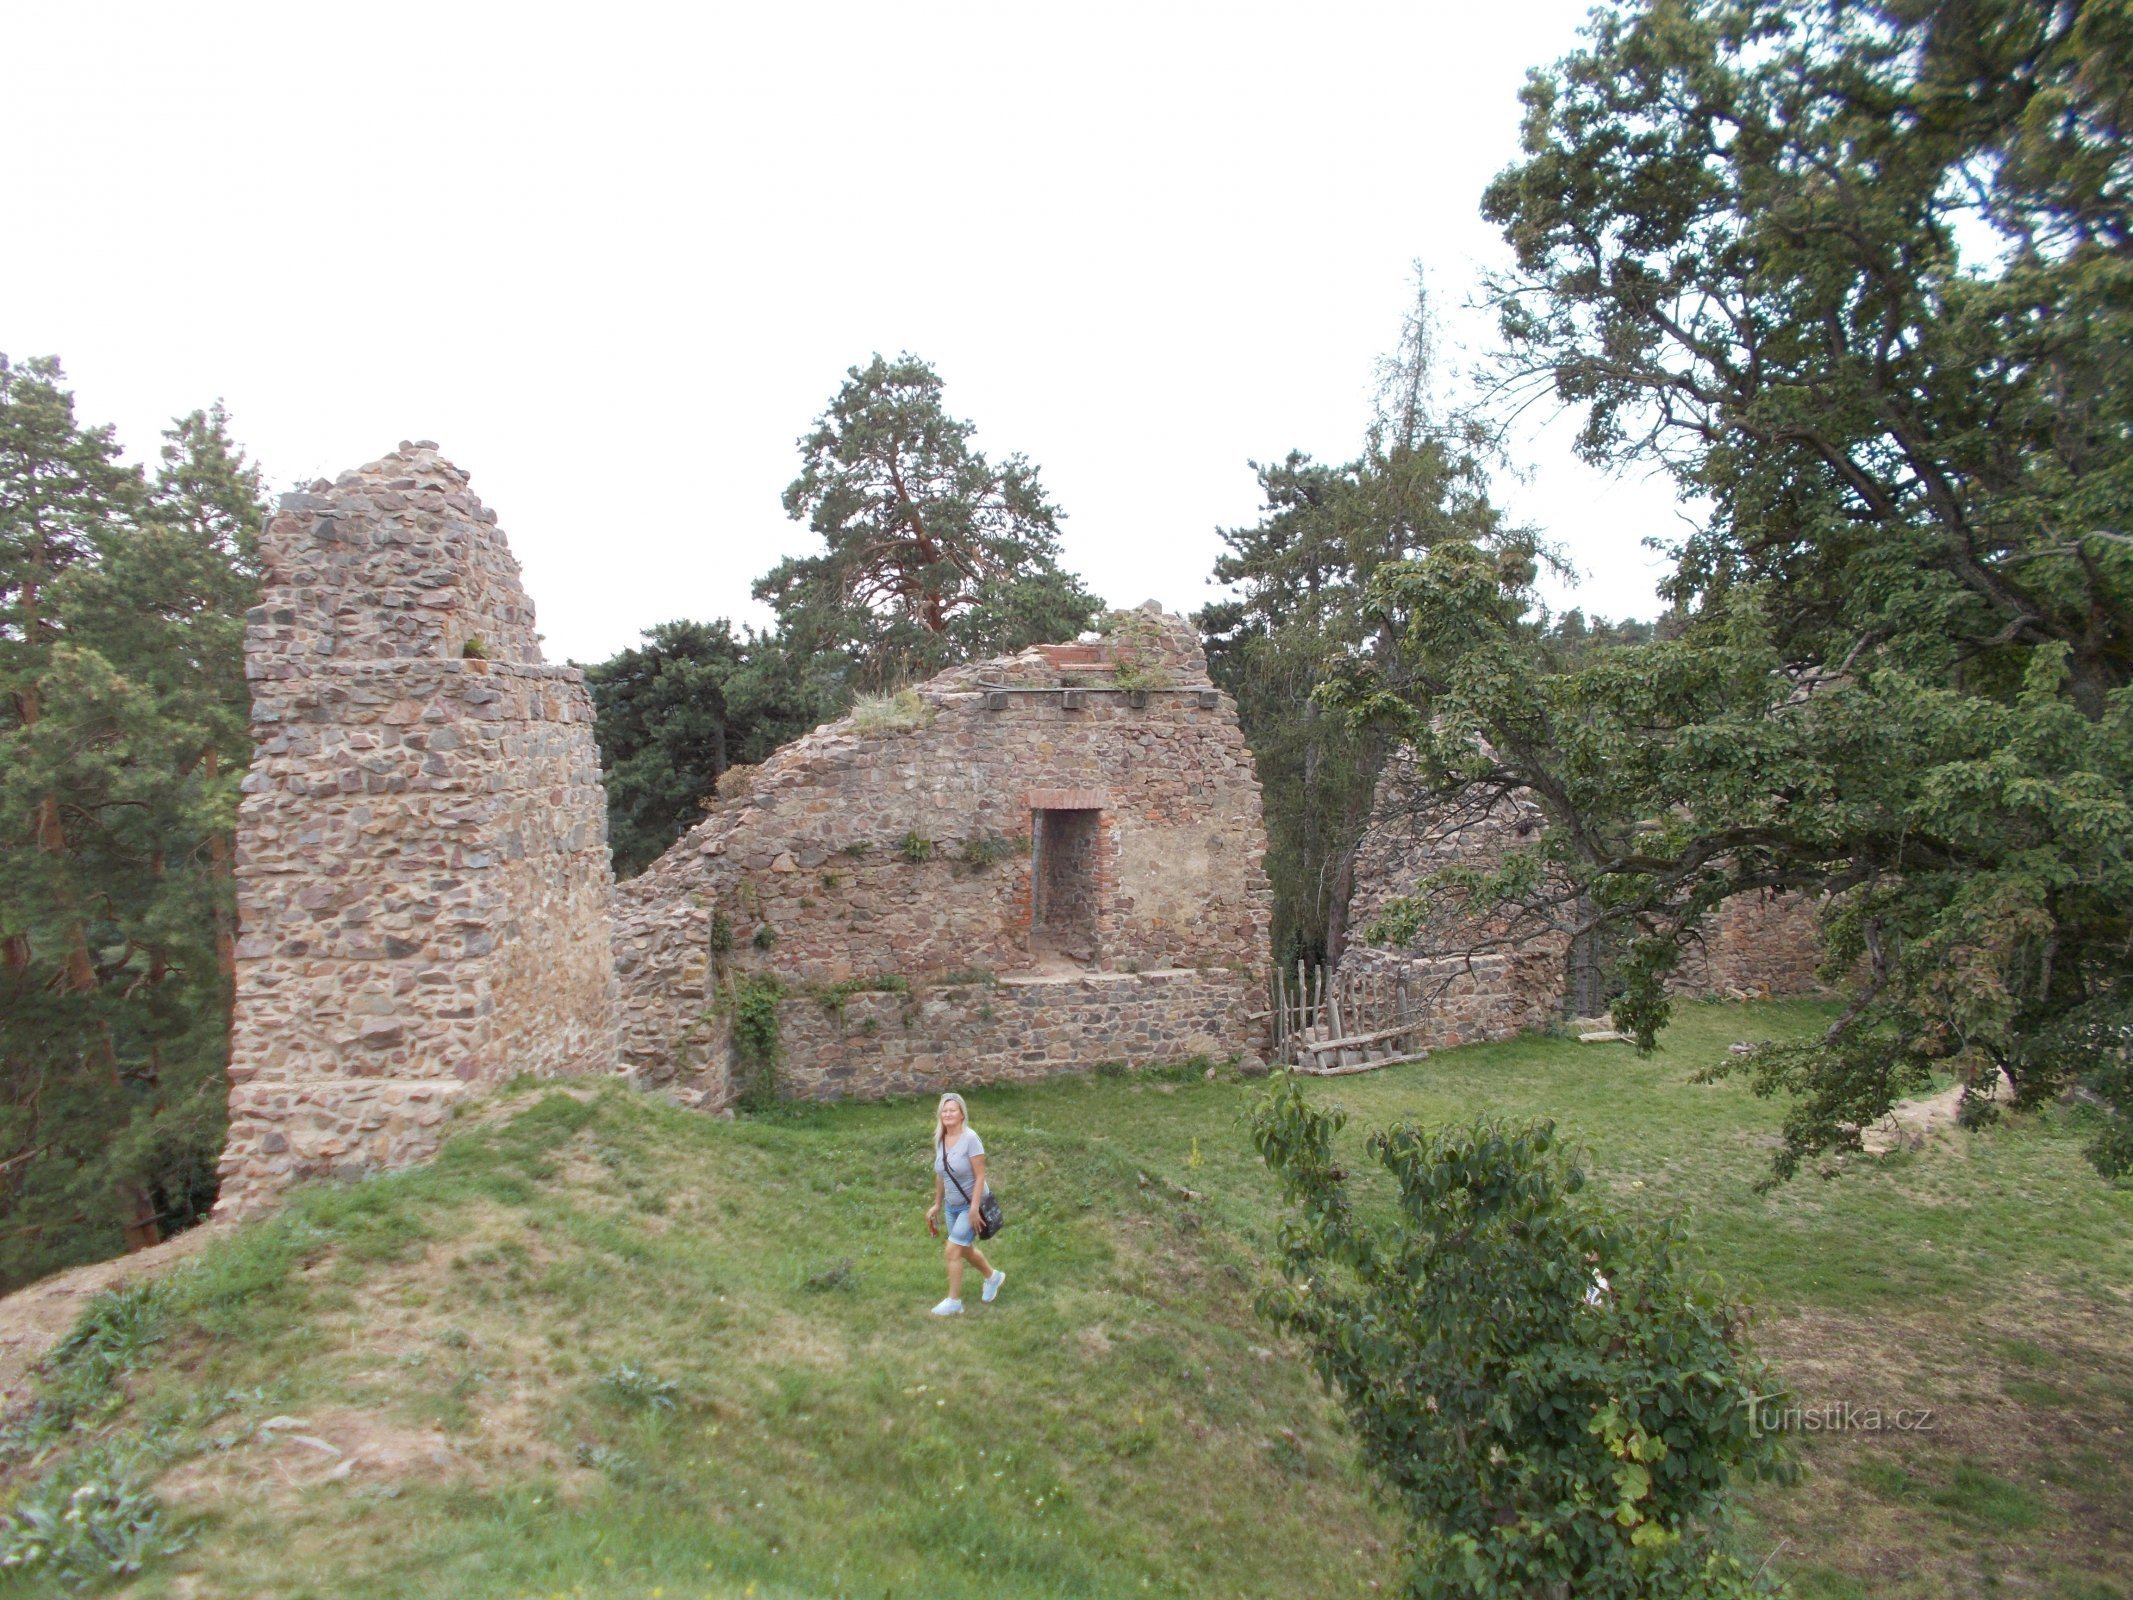 The ruins of the Žumberk castle